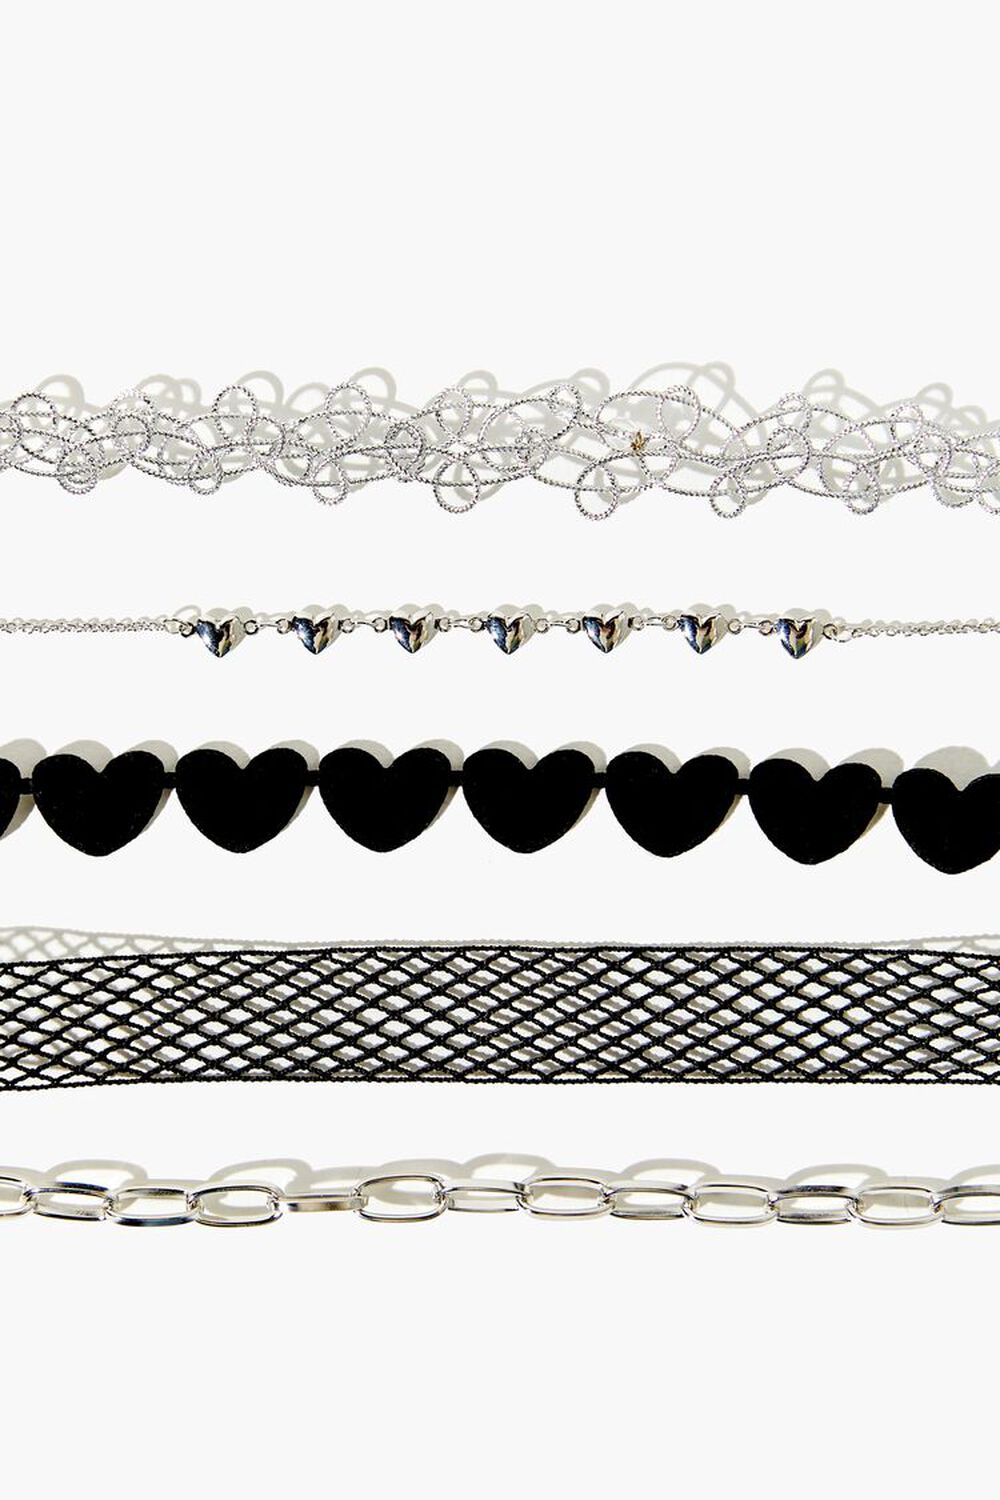 BLACK/SILVER Assorted Choker Necklace Set, image 1